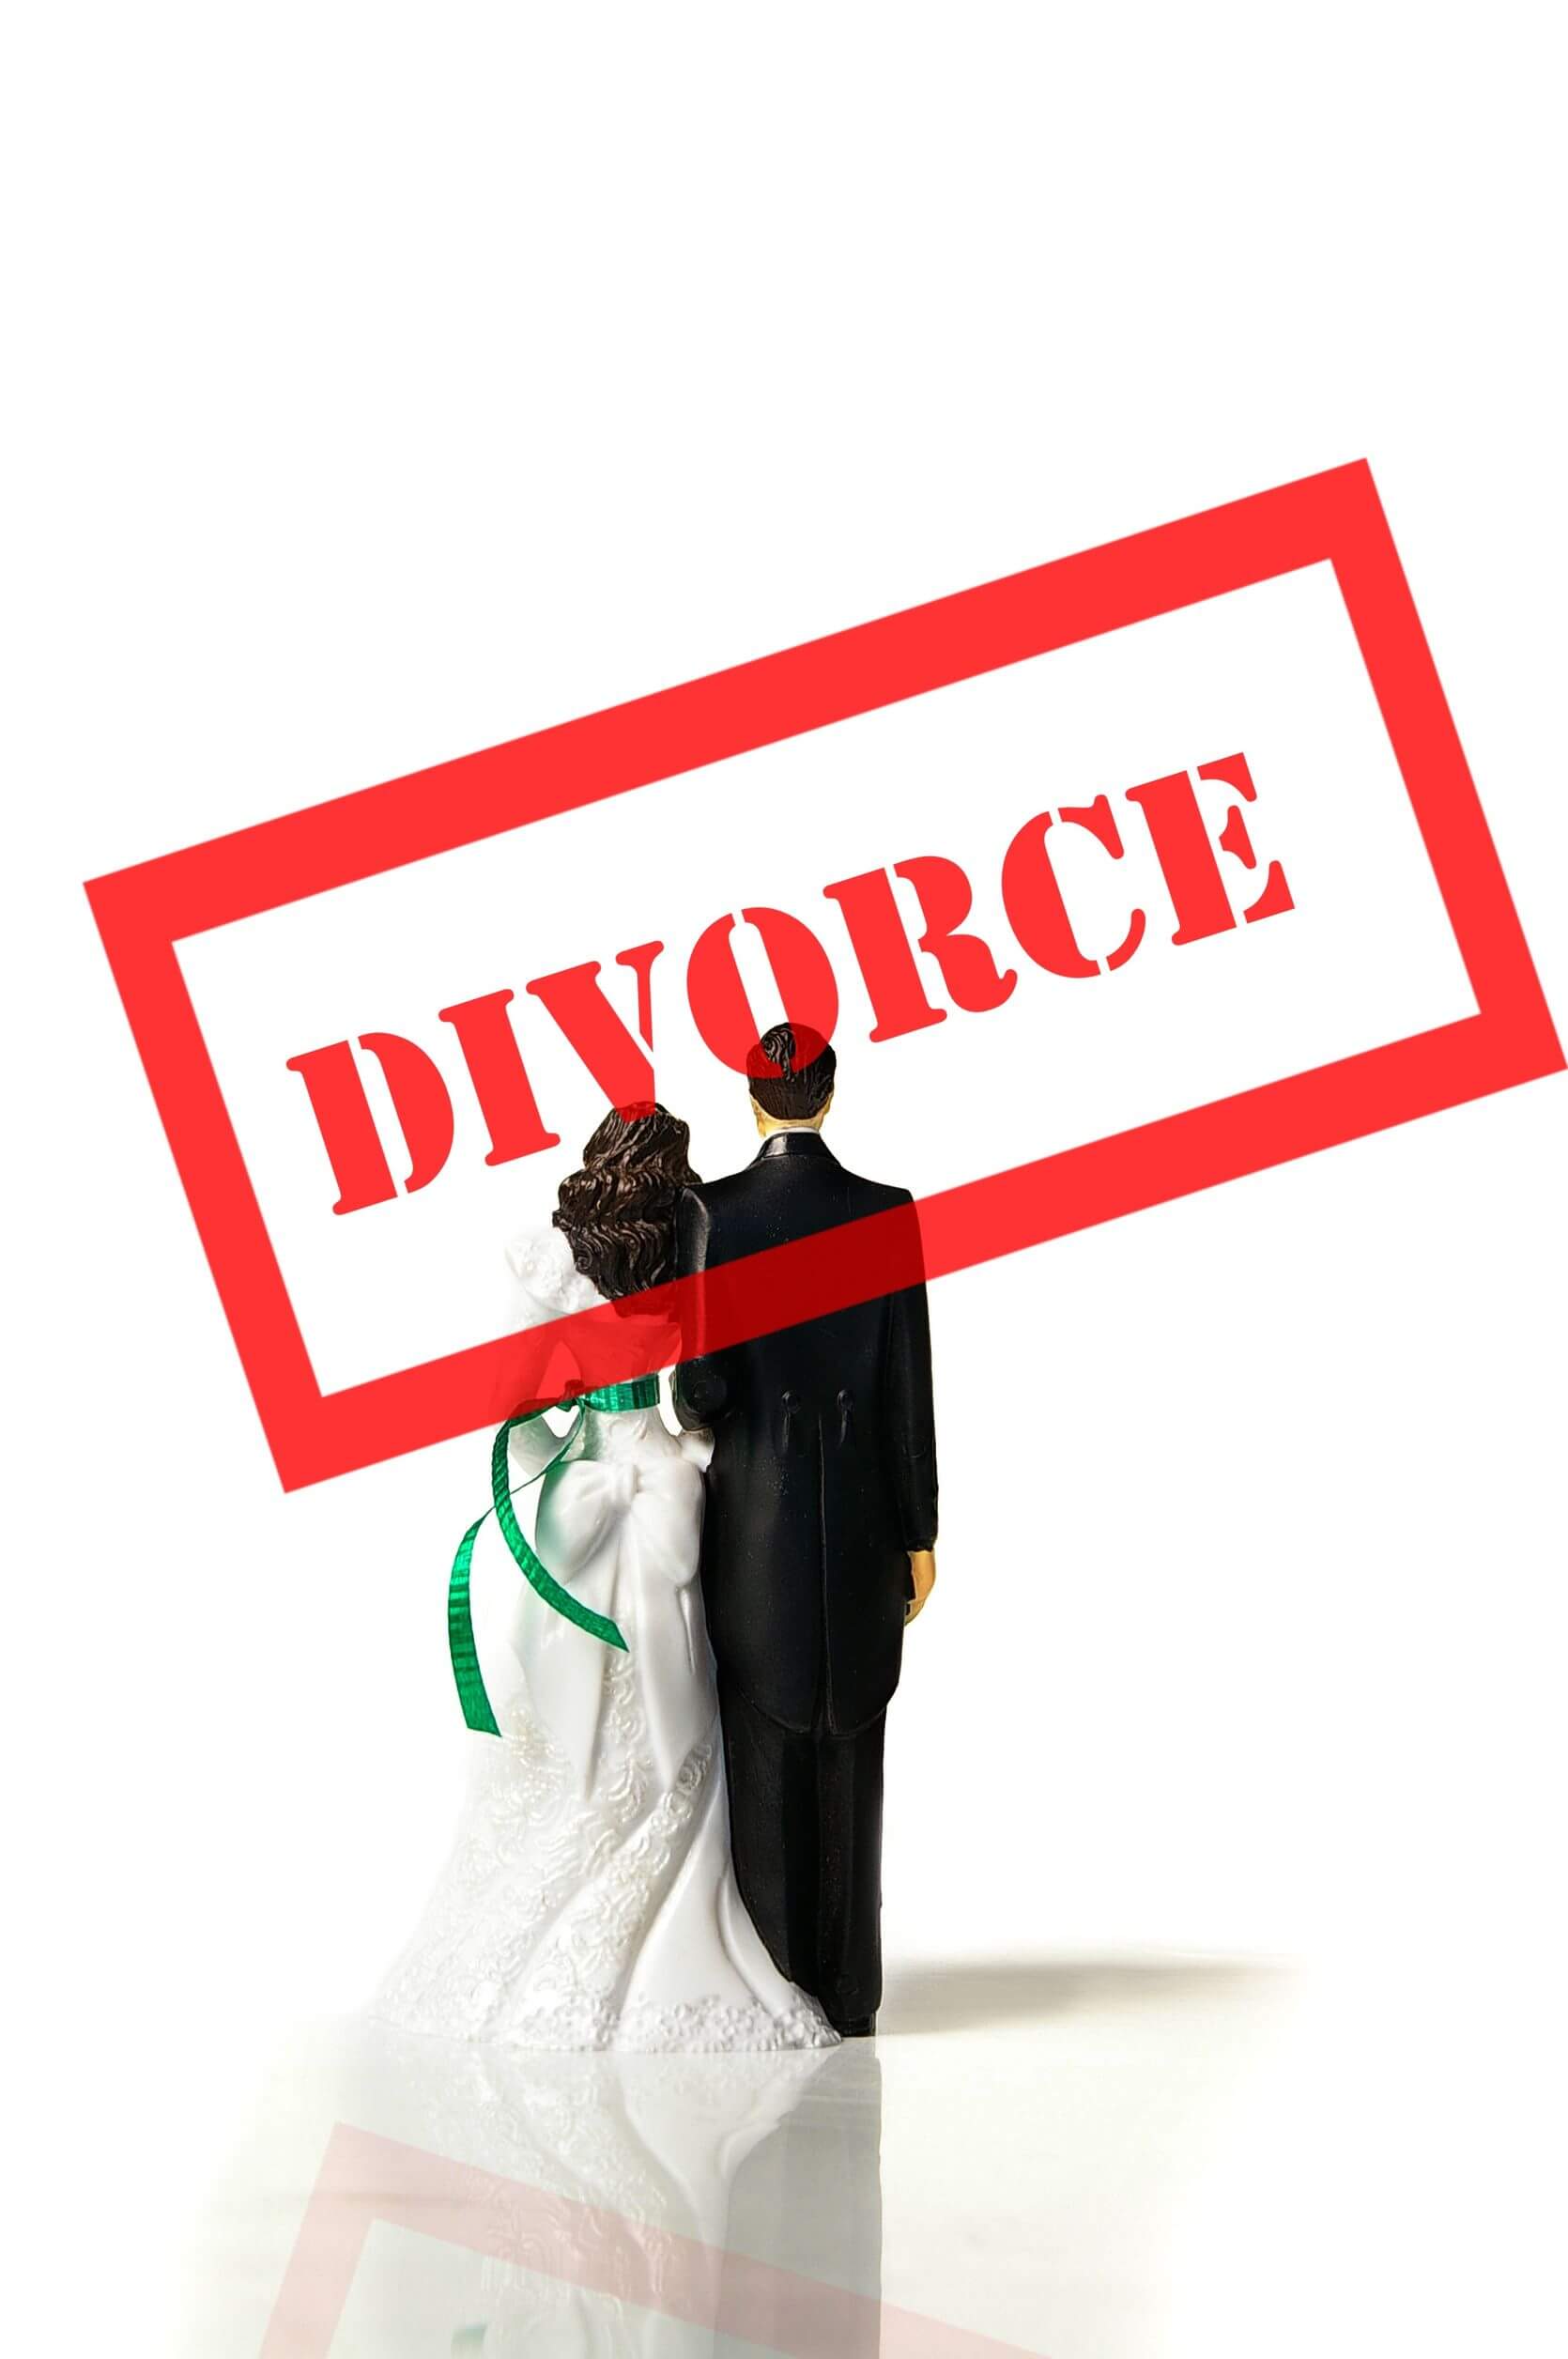 Determining the reasons for divorce - Georgia Divorce law in Marietta- Divorce Attorney Sean R Whitworth in the Greater Atlanta Area